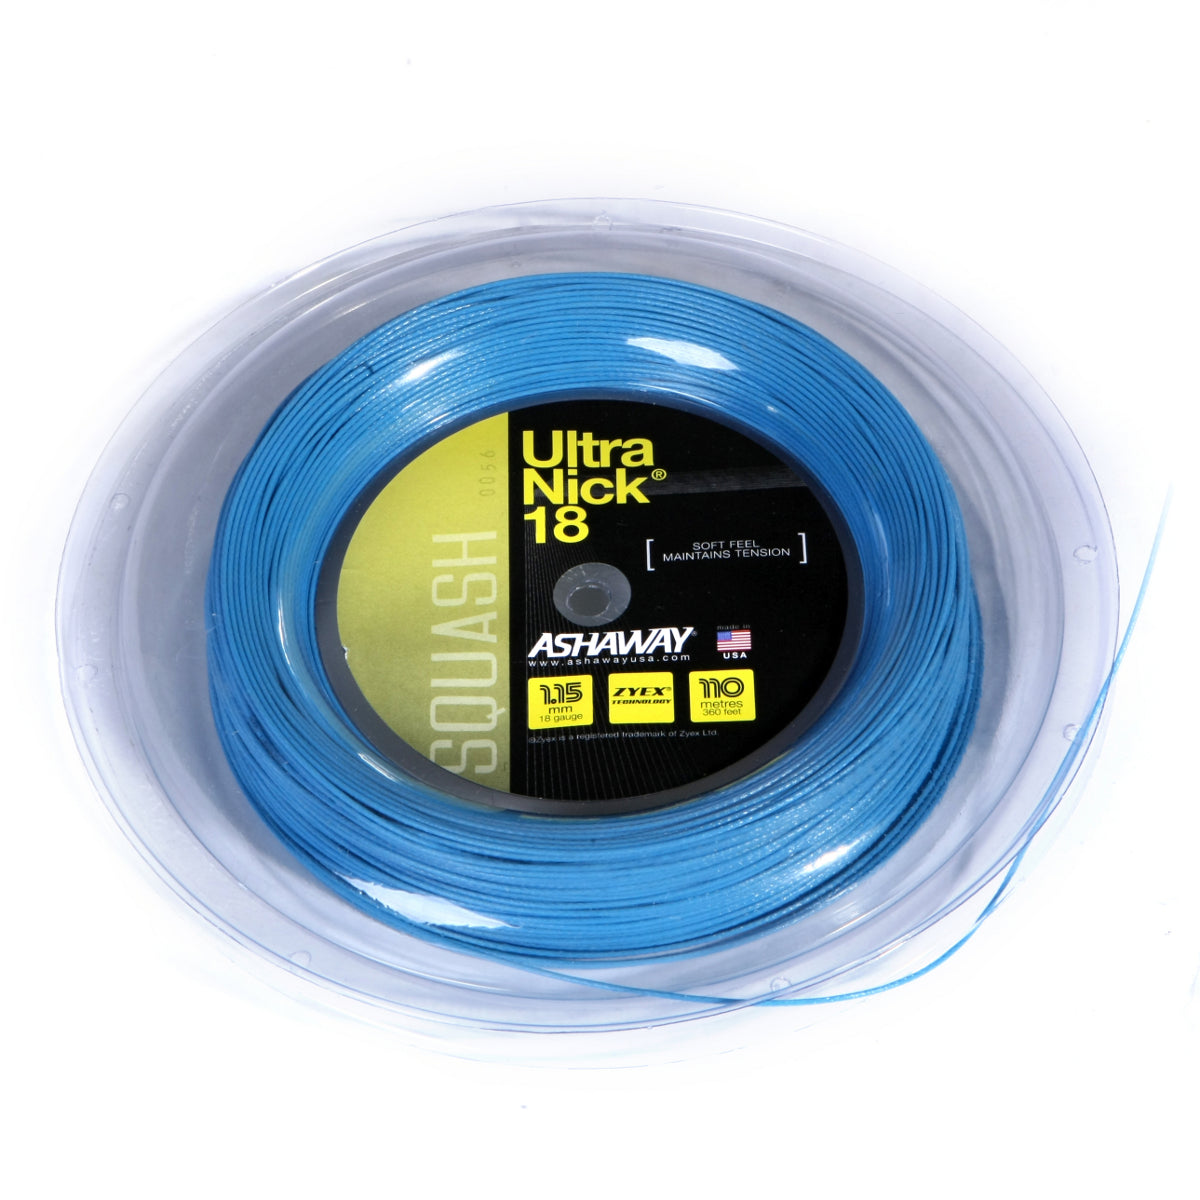 Ashaway UltraNick 18 Squash String - 110m reel